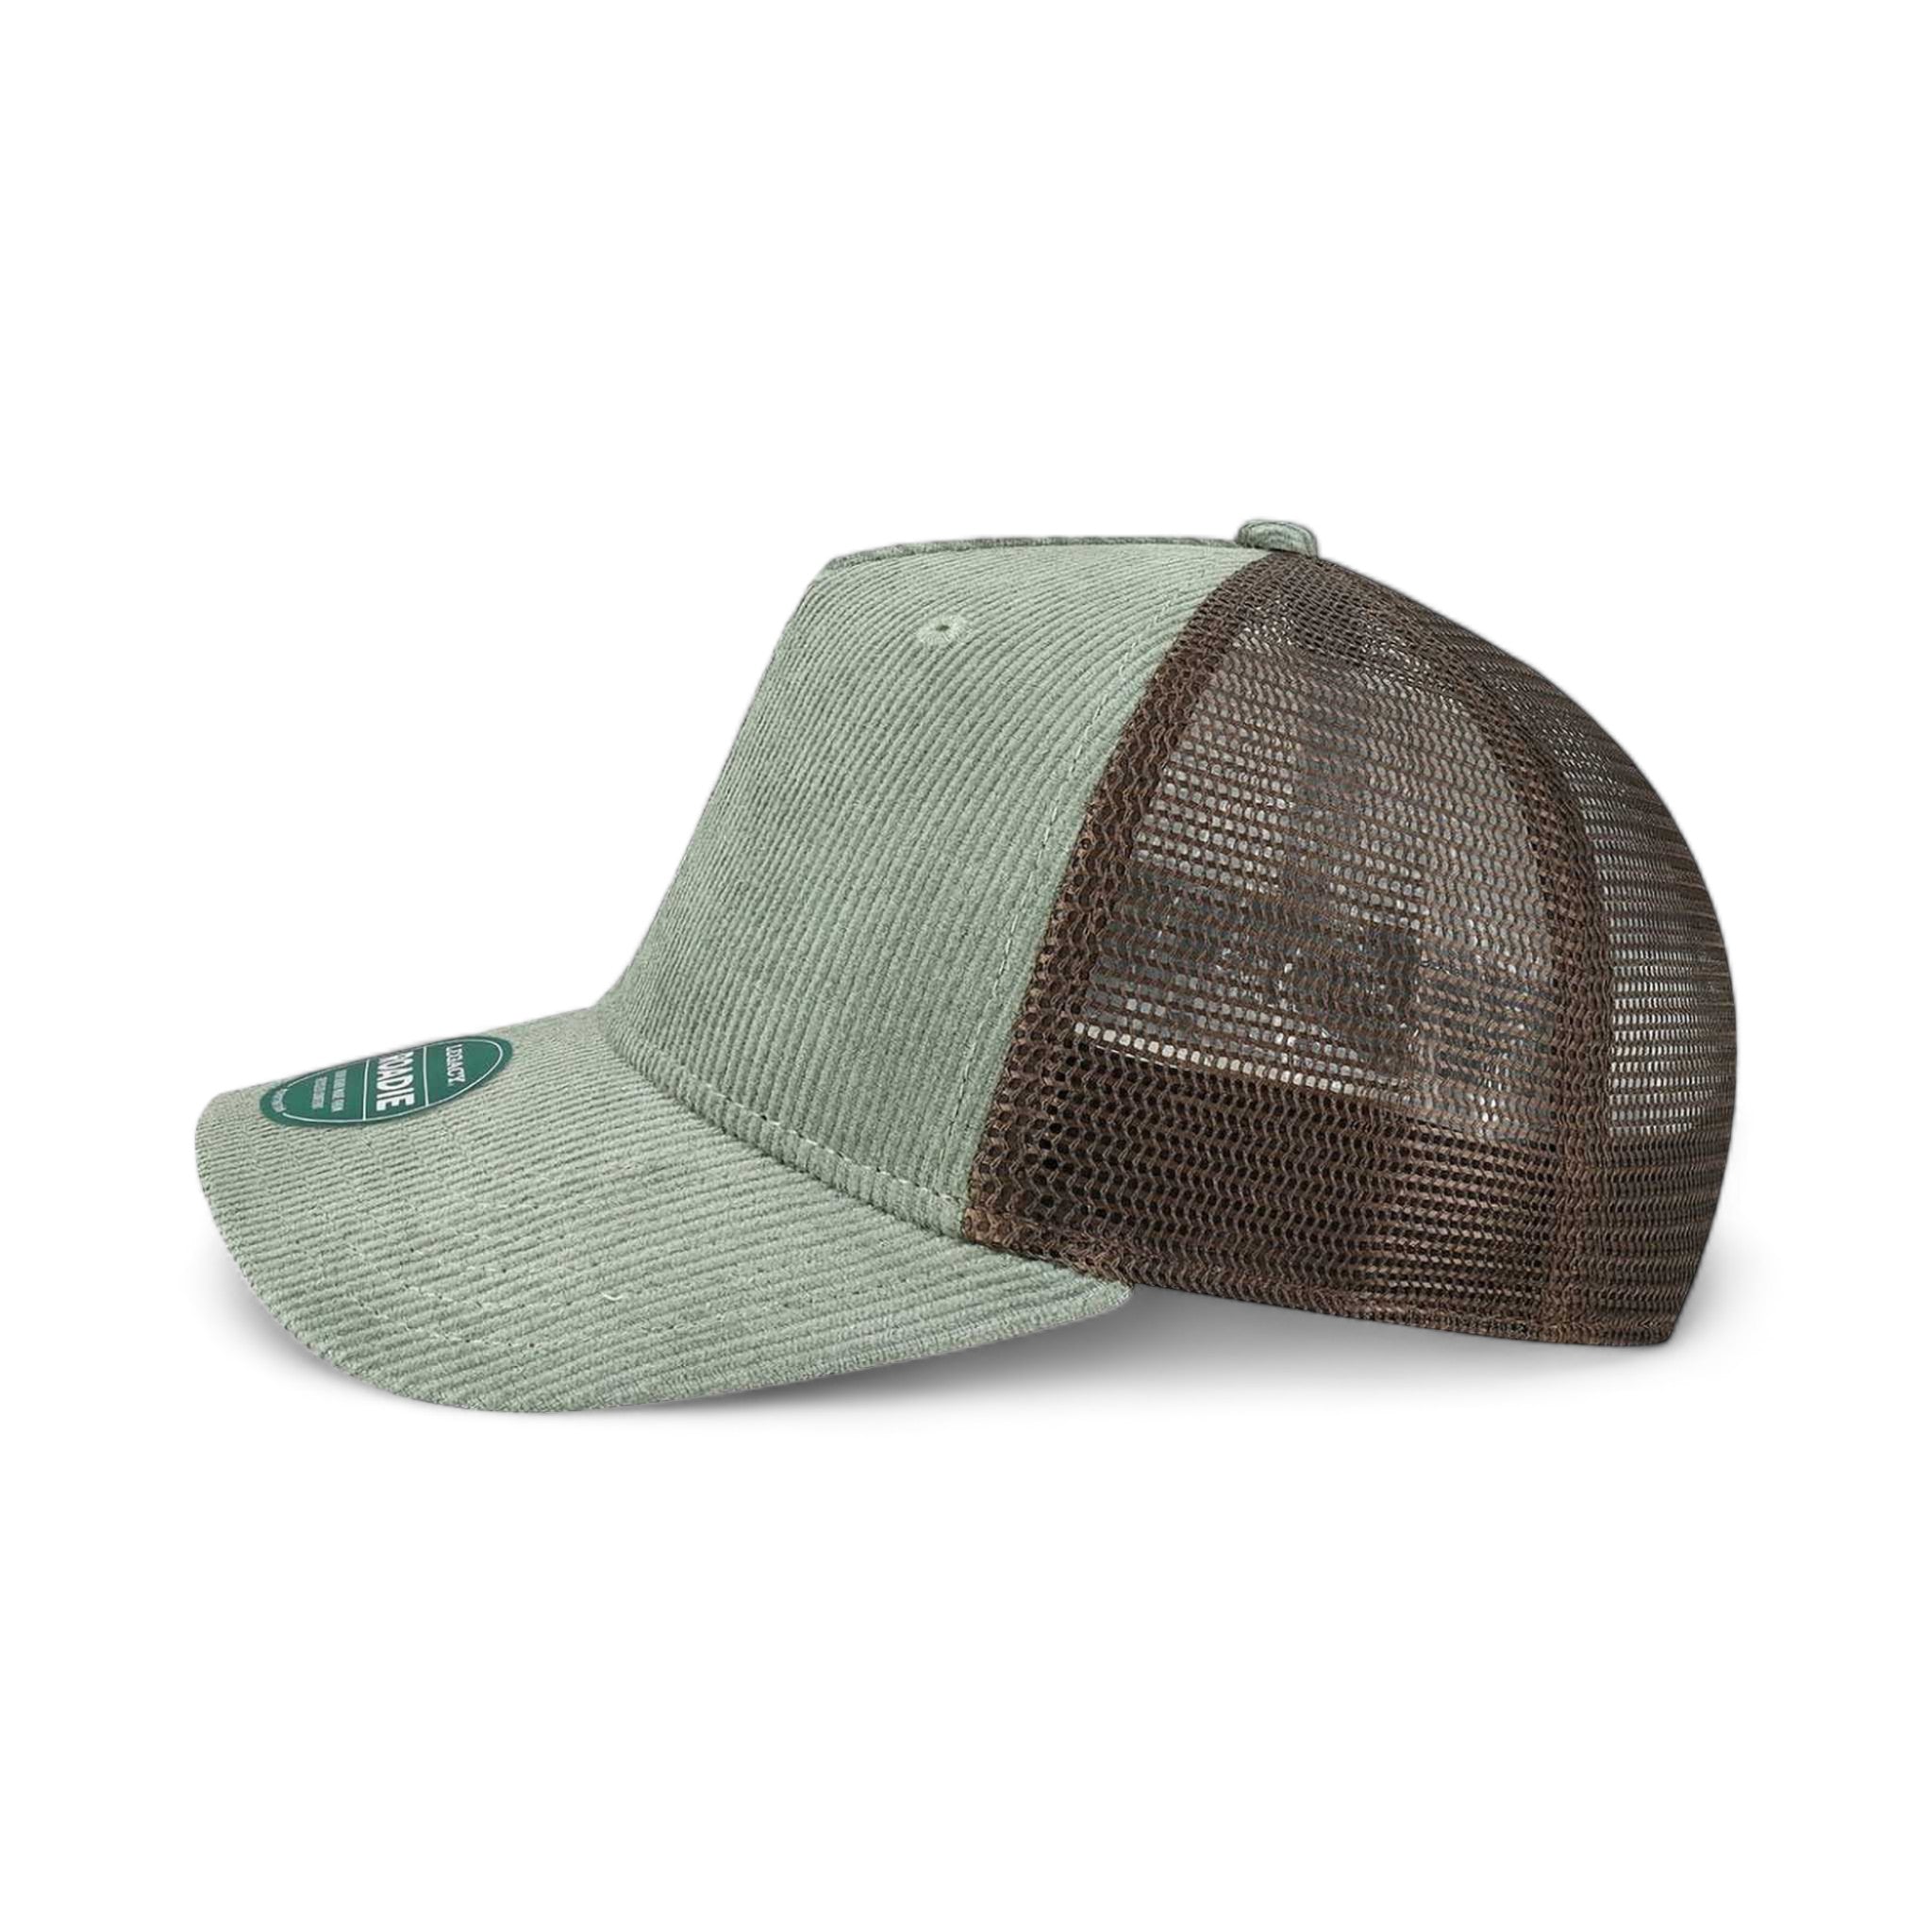 Side view of LEGACY ROADIE custom hat in sawgrass corduroy and  brown